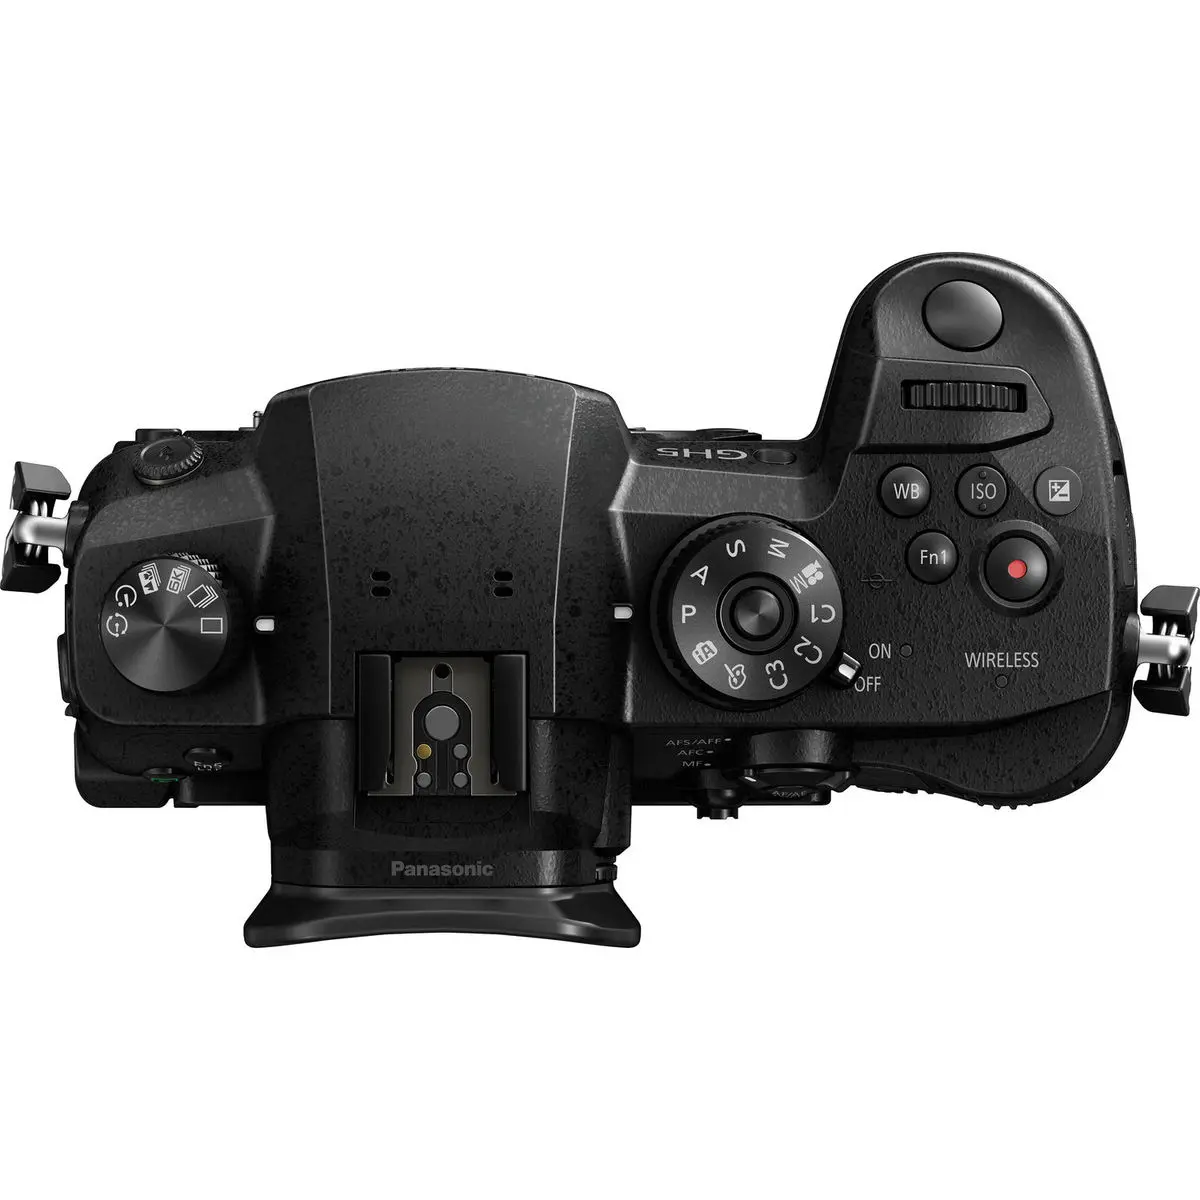 5. Panasonic Lumix DC-GH5 Body Camera